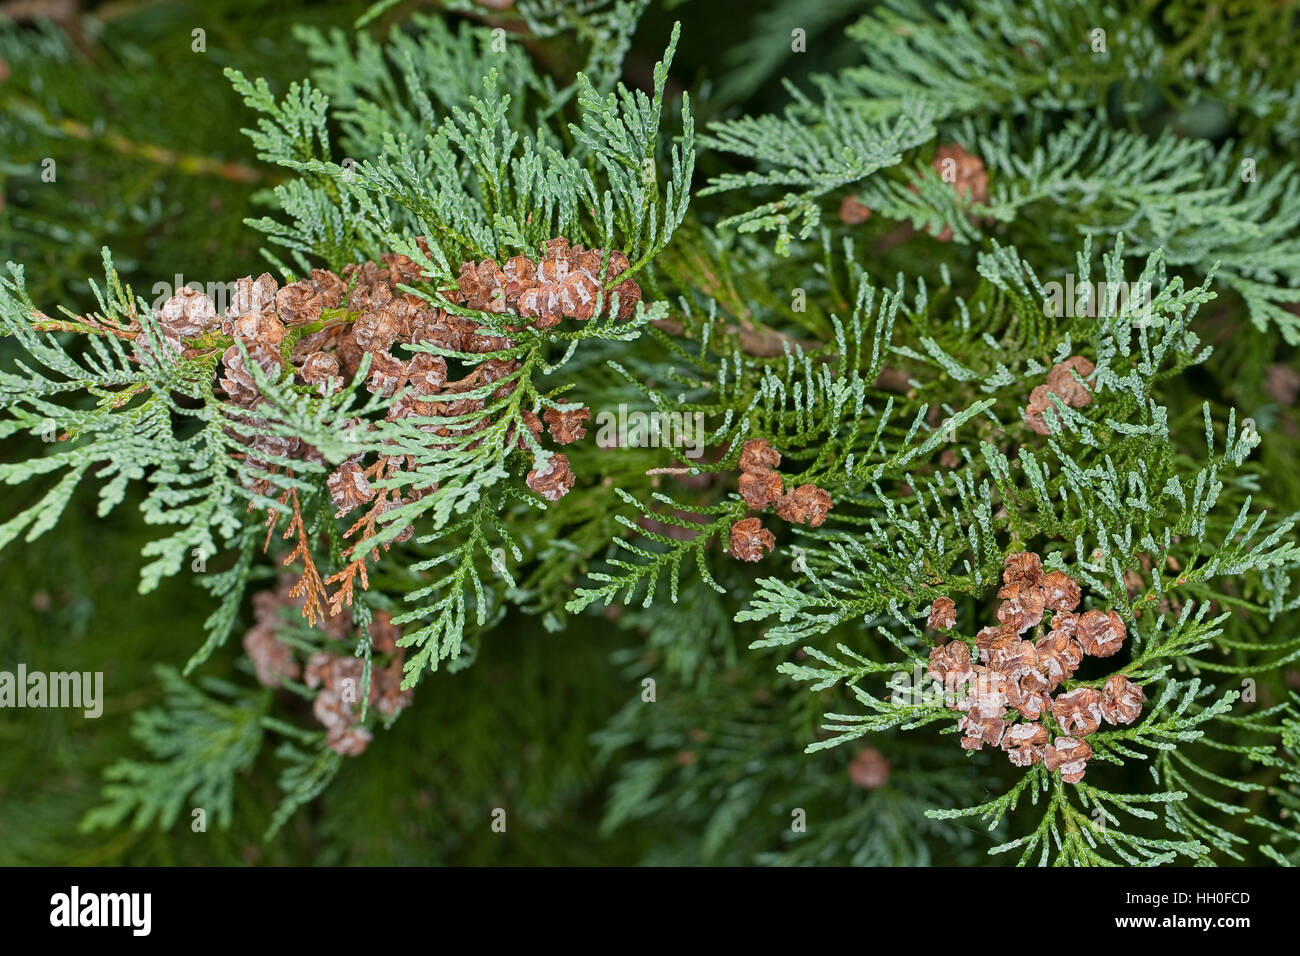 Lawsons-Scheinzypresse, Lawsons Scheinzypresse, Zypresse, Chamaecyparis lawsoniana, Lawson´s Cypress, Lawson Cypress Stock Photo